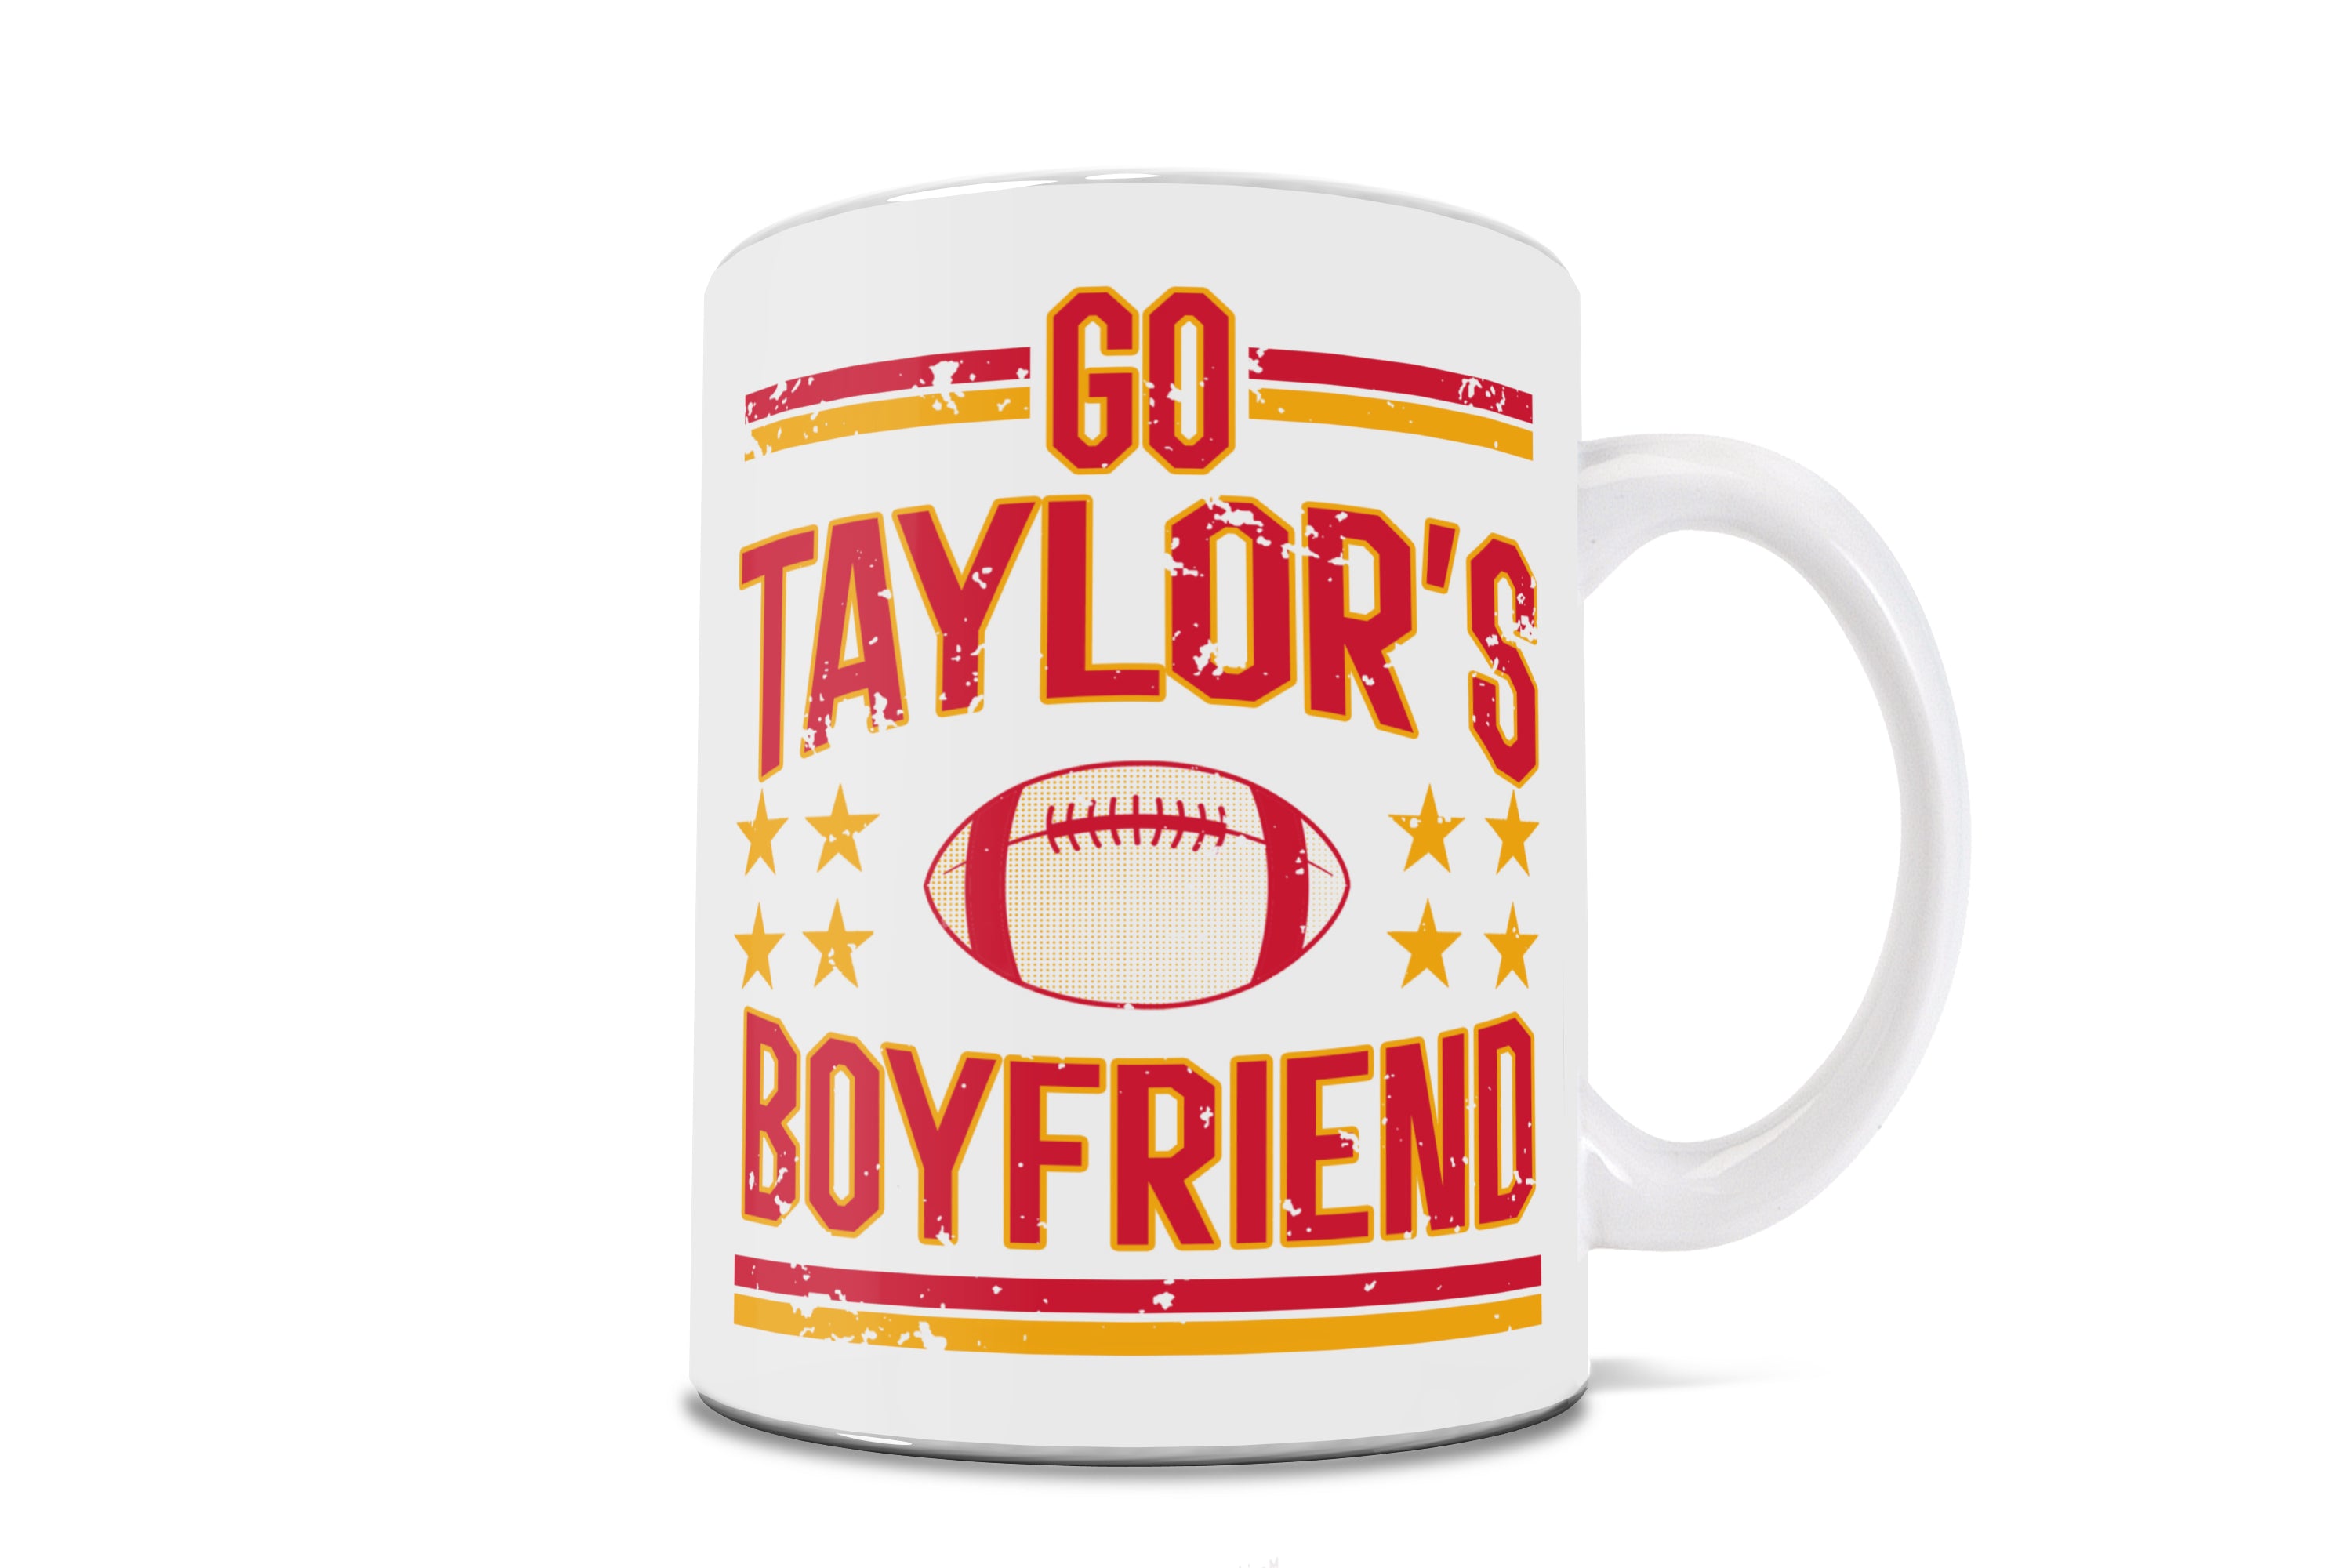 Sports Collection (Go Taylor’s Boyfriend) White Ceramic Mug